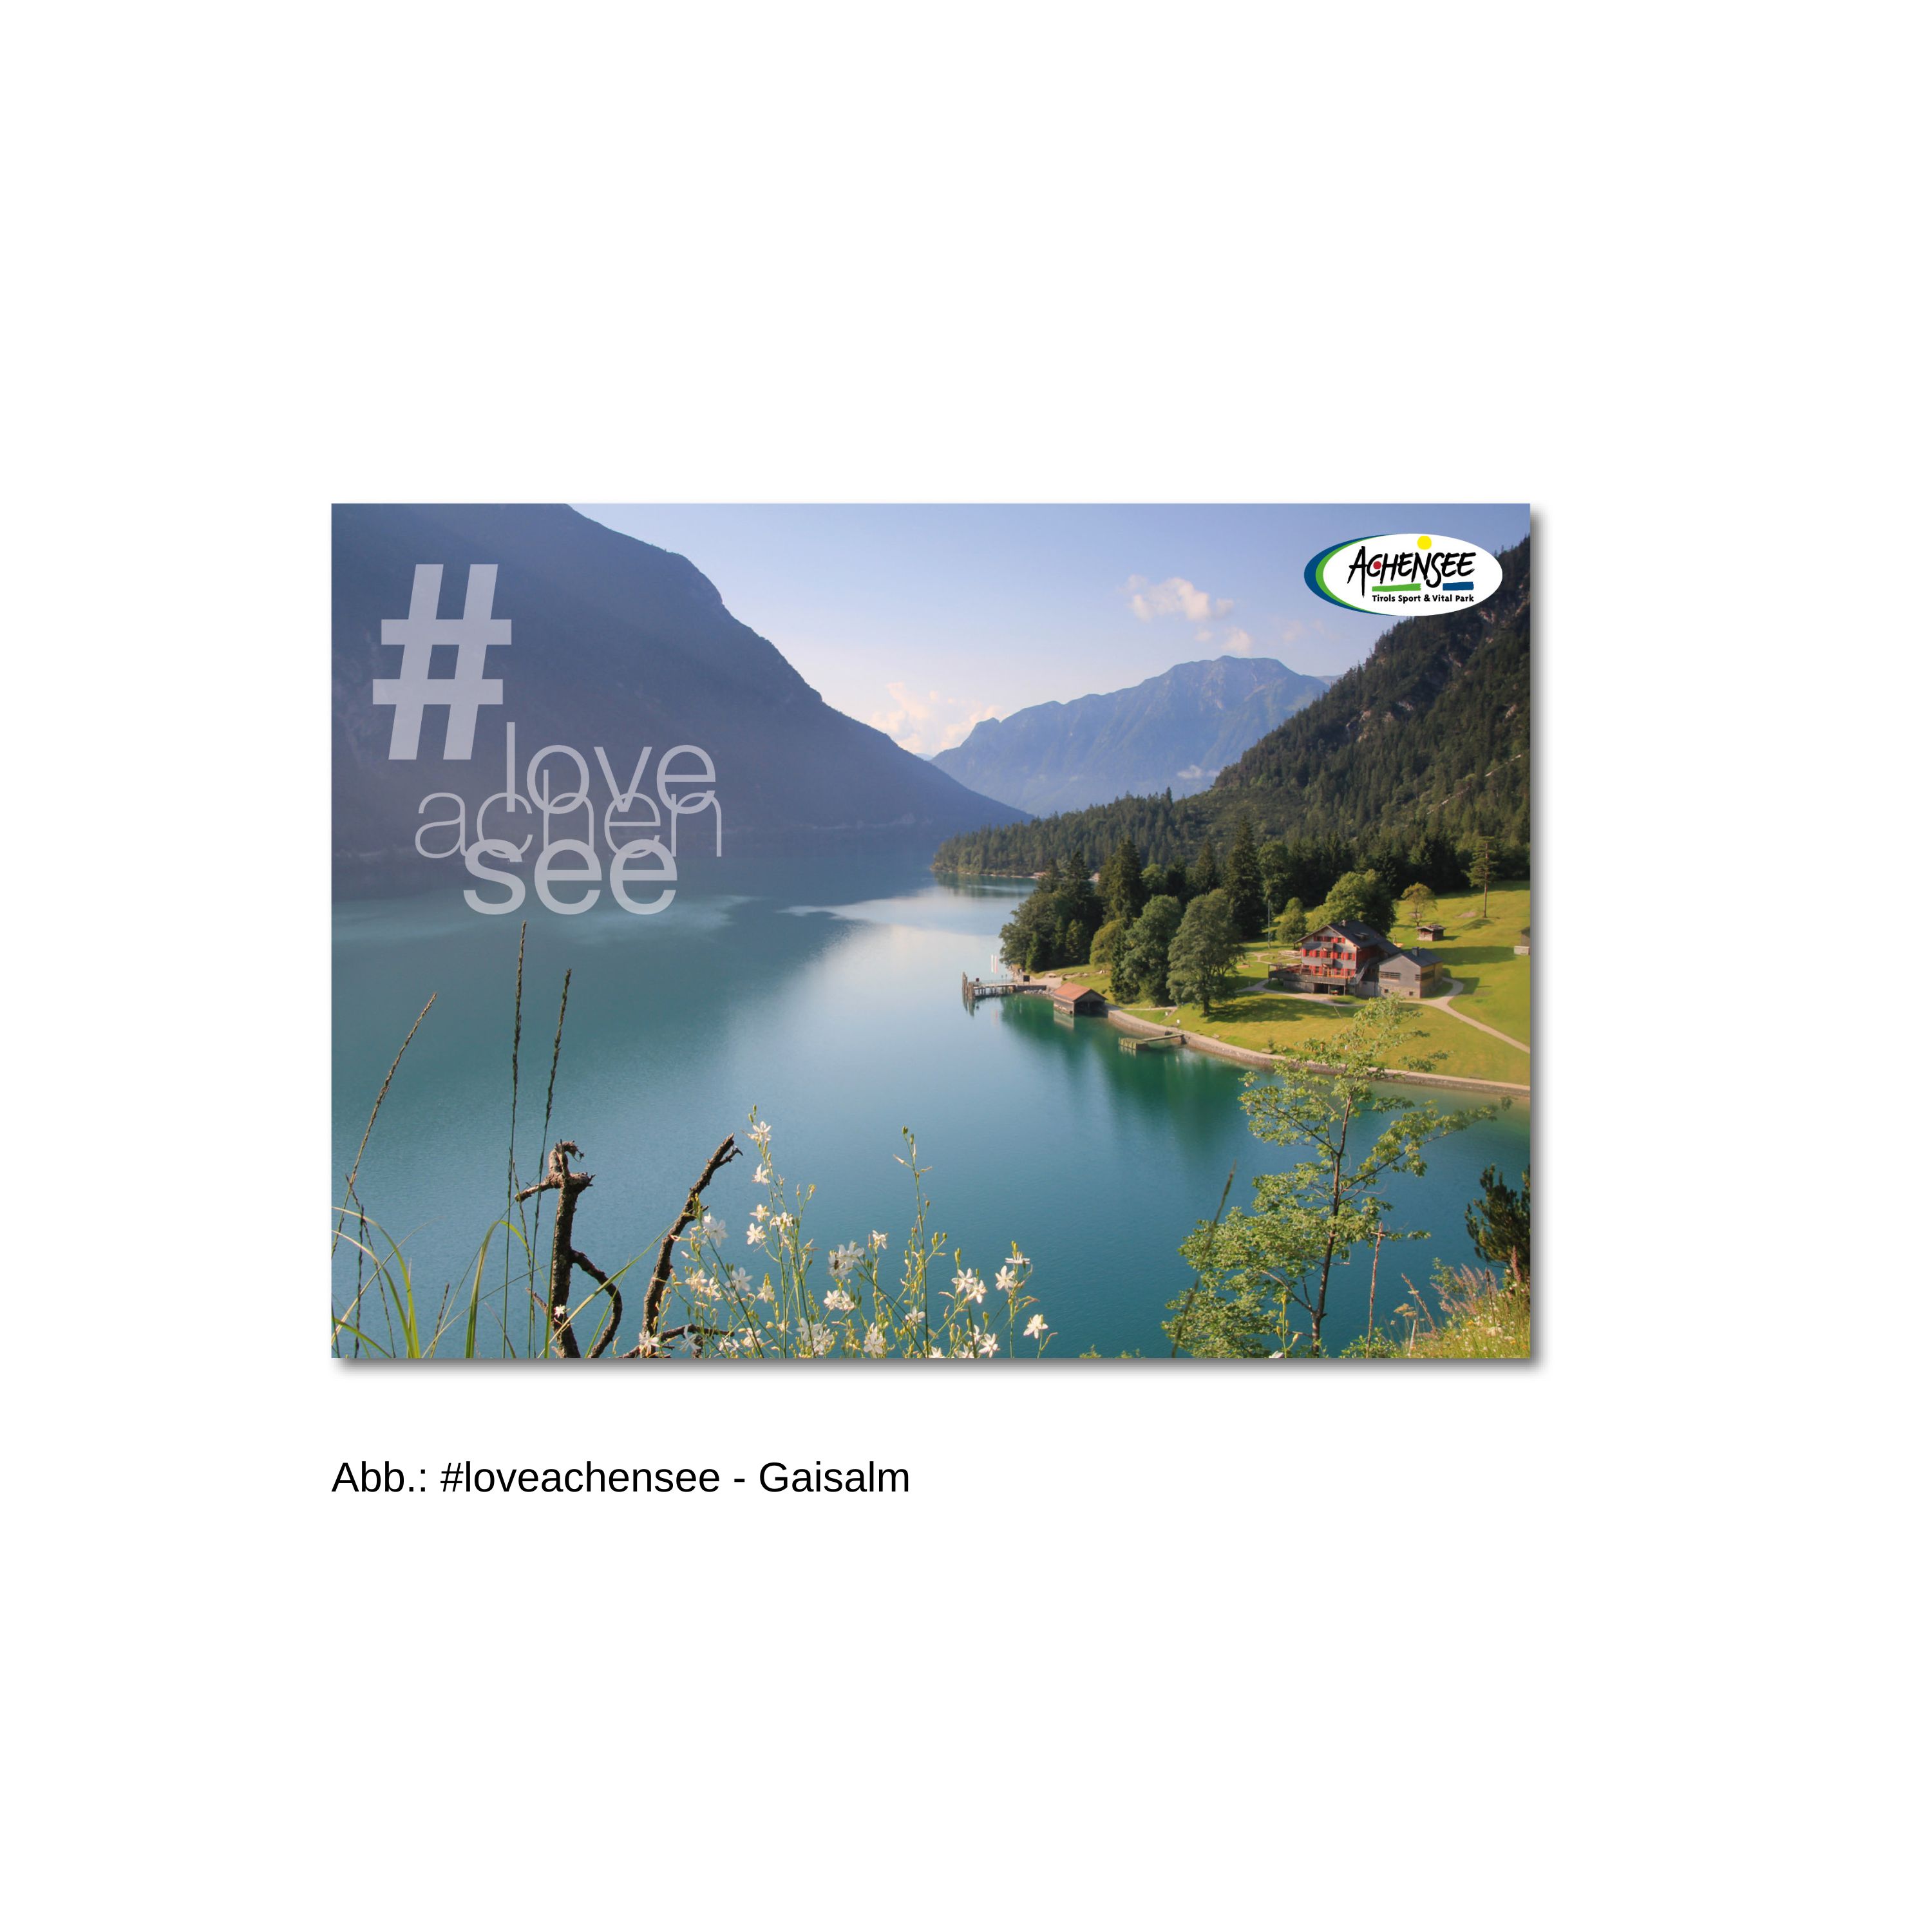 Postkarte der Gaisalm #loveachensee